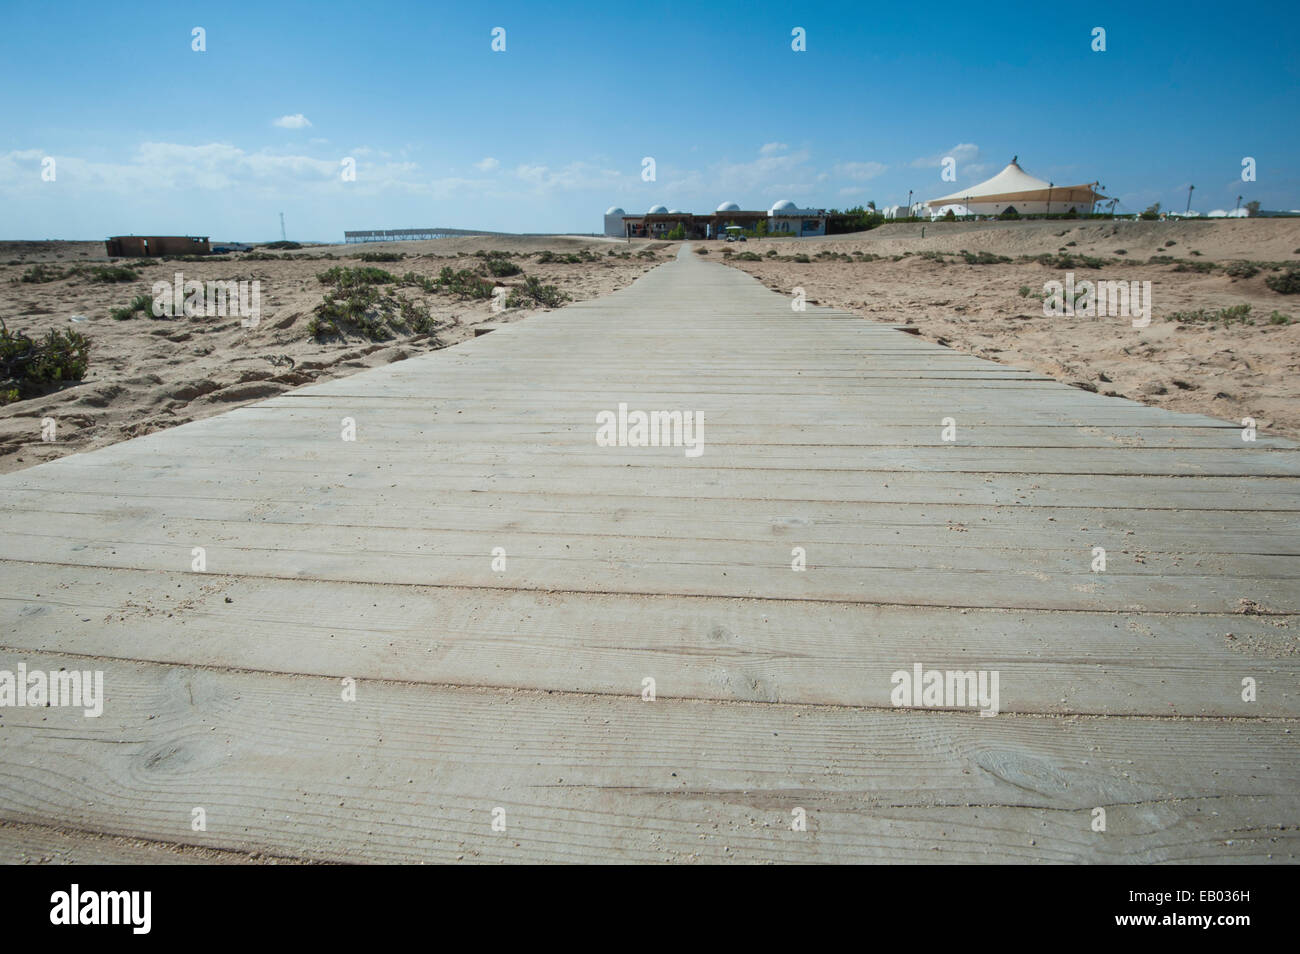 Closeup detail of wooden planking walkway across desert sand dune Stock Photo